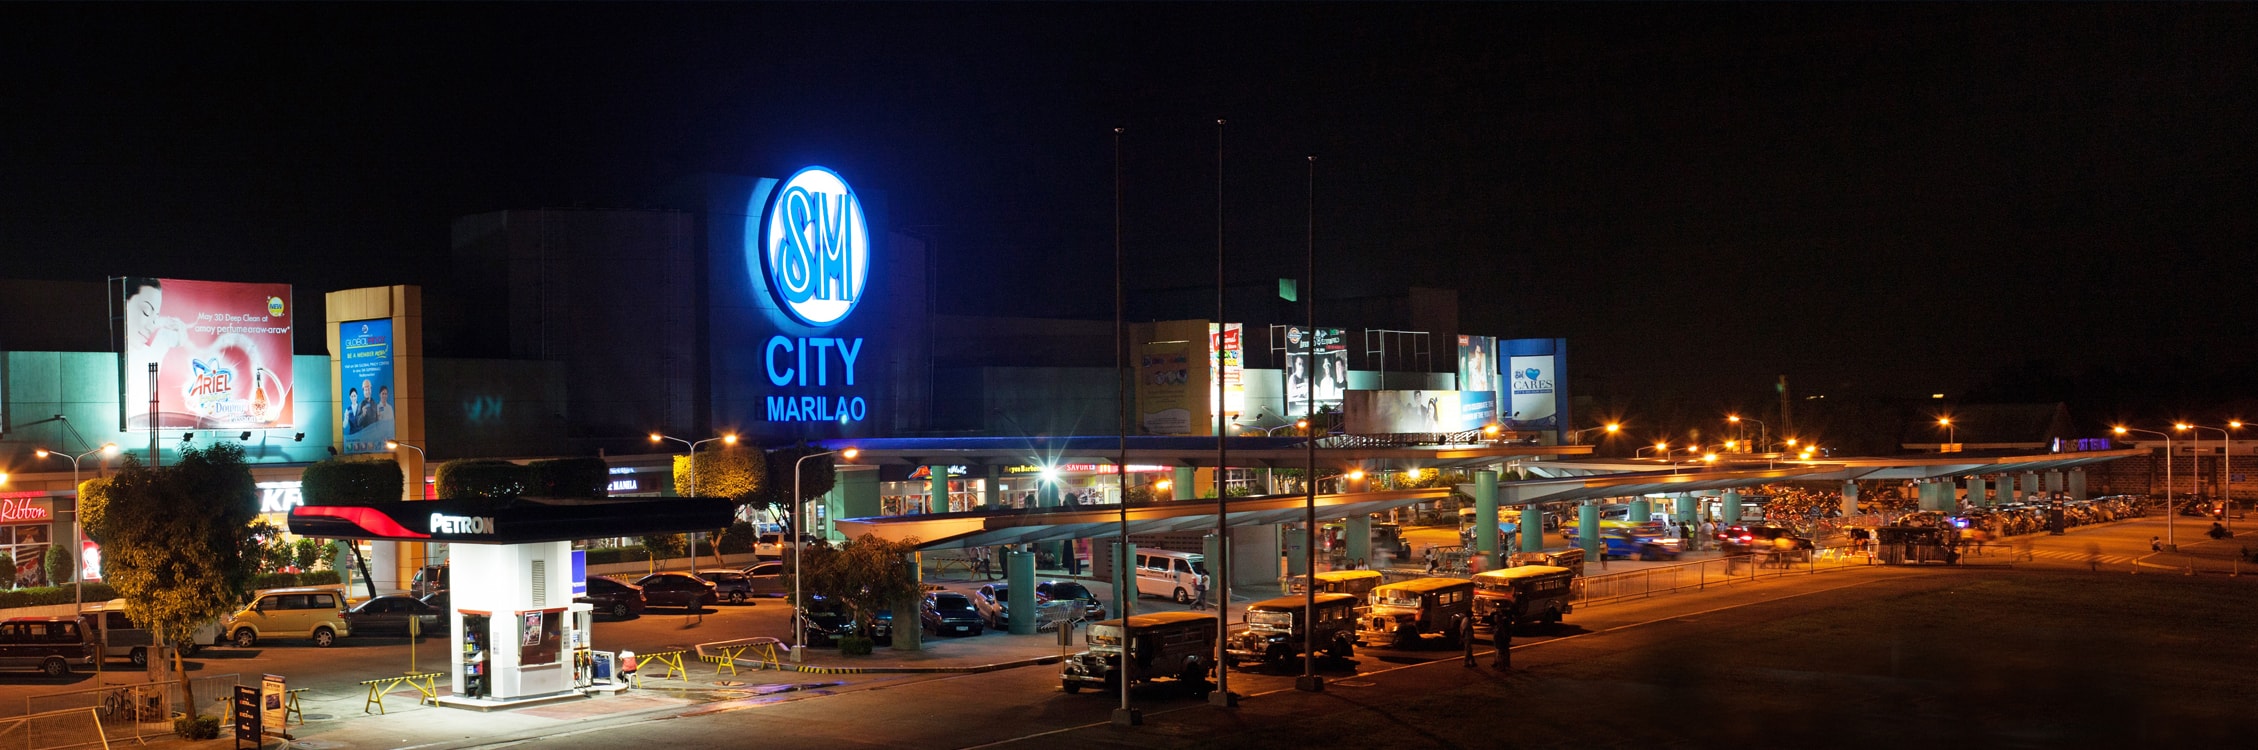 SM City Marilao | SM Supermalls